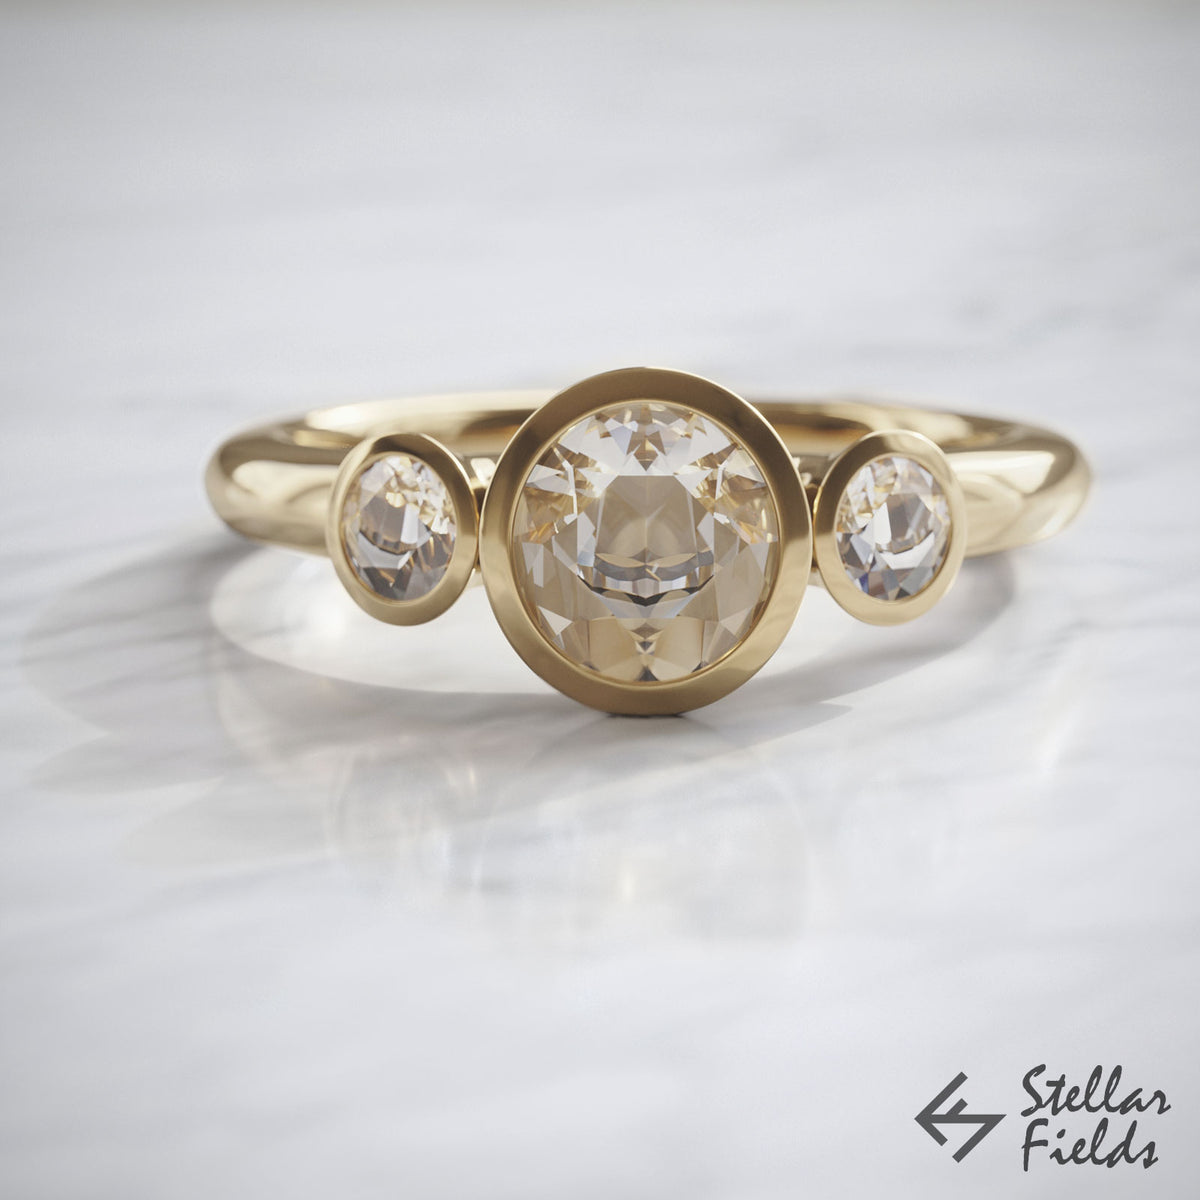 Multi Stone Bezel Engagement Ring Ethical Canadian Diamonds Bezel Ring 14k Yellow Gold Stellar Fields Jewellery